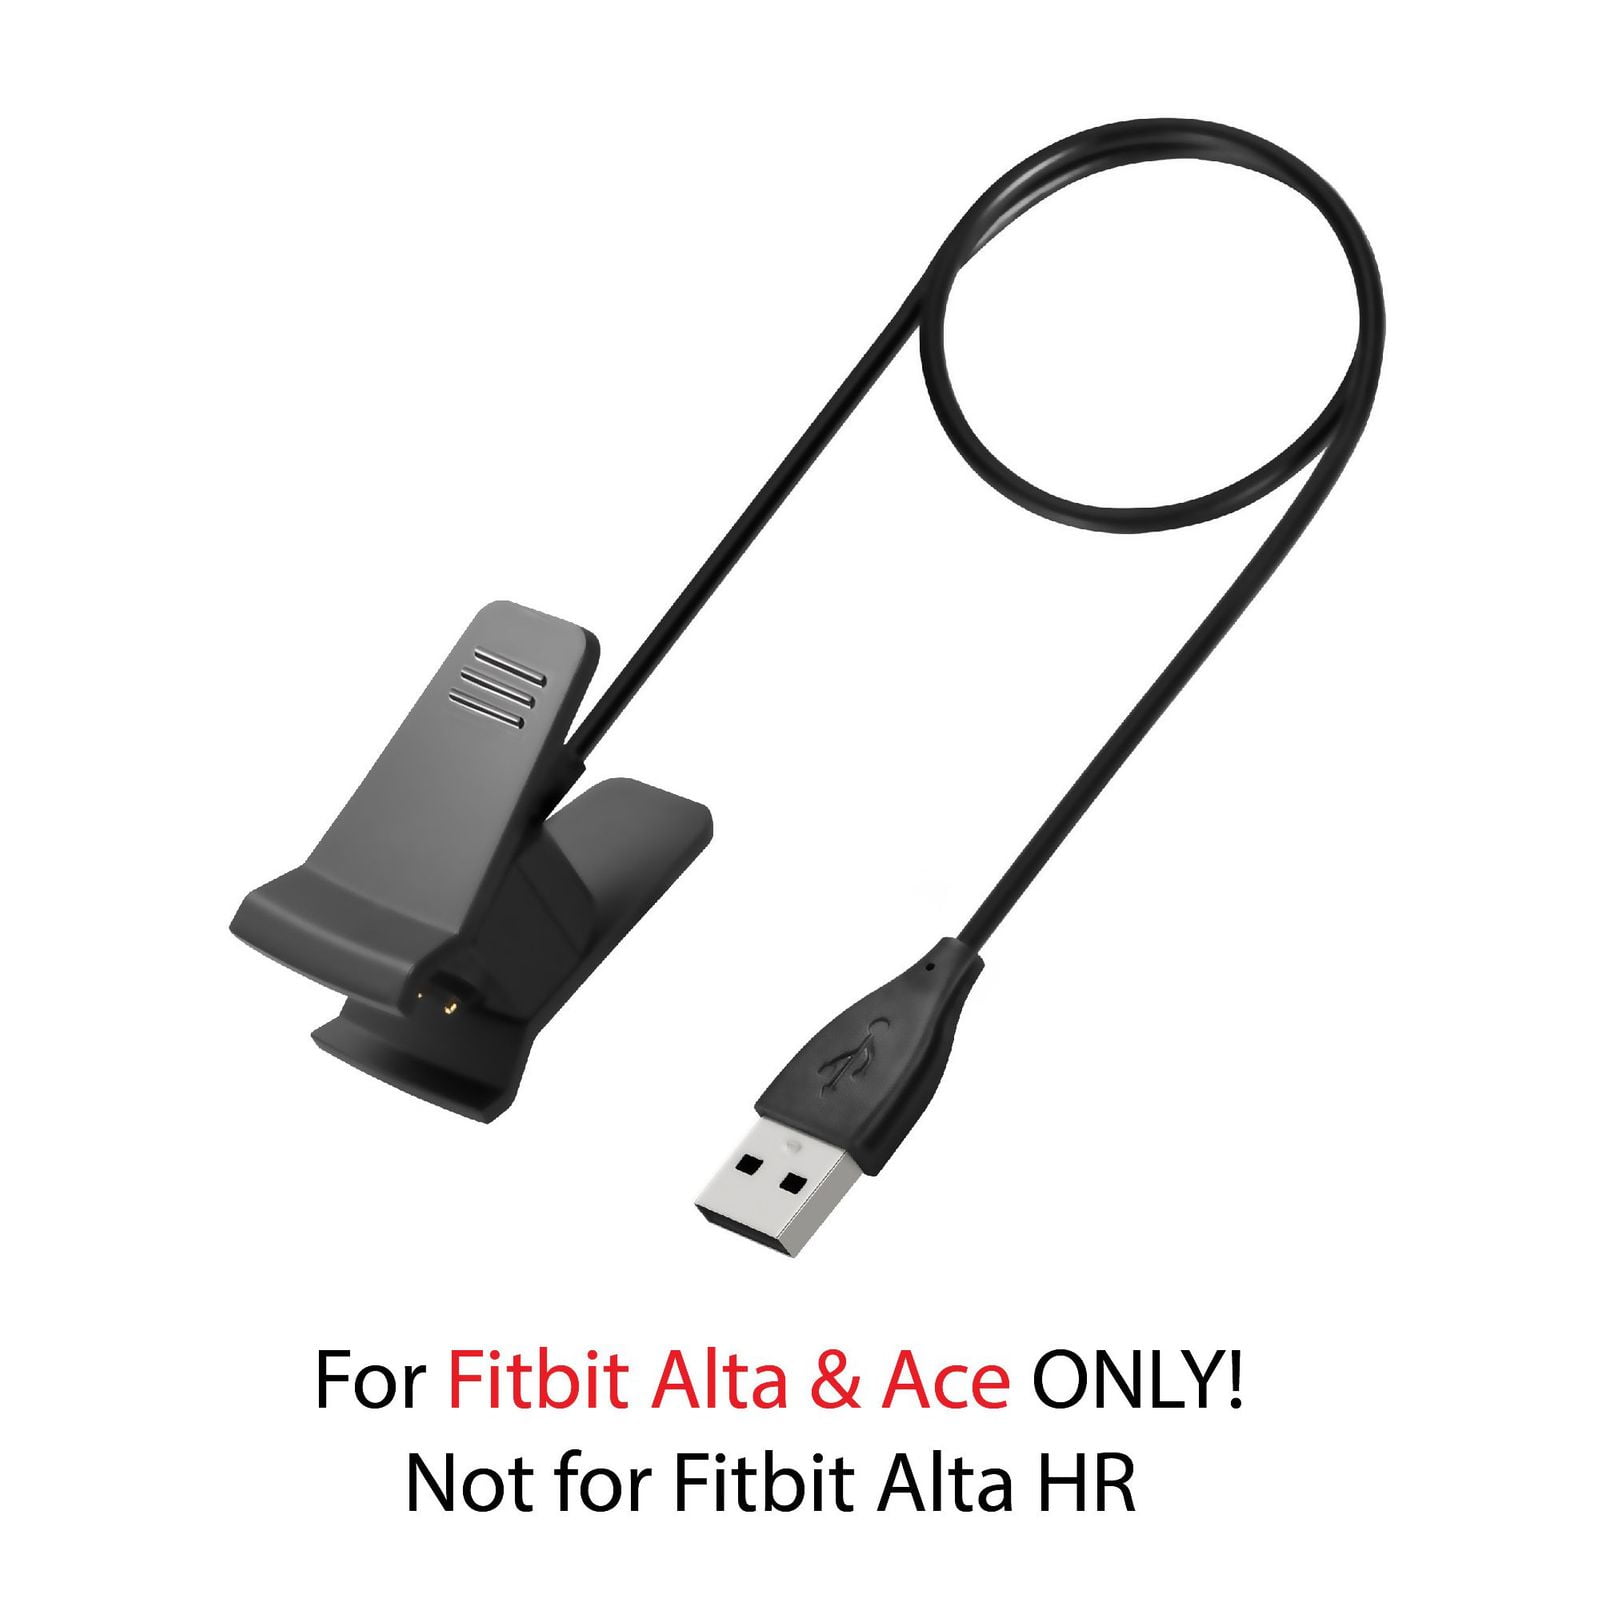 USB Ladekabel für Fitbit Alta HR Smartwatch FitnessTracker Ladegerät Ladeadapter 